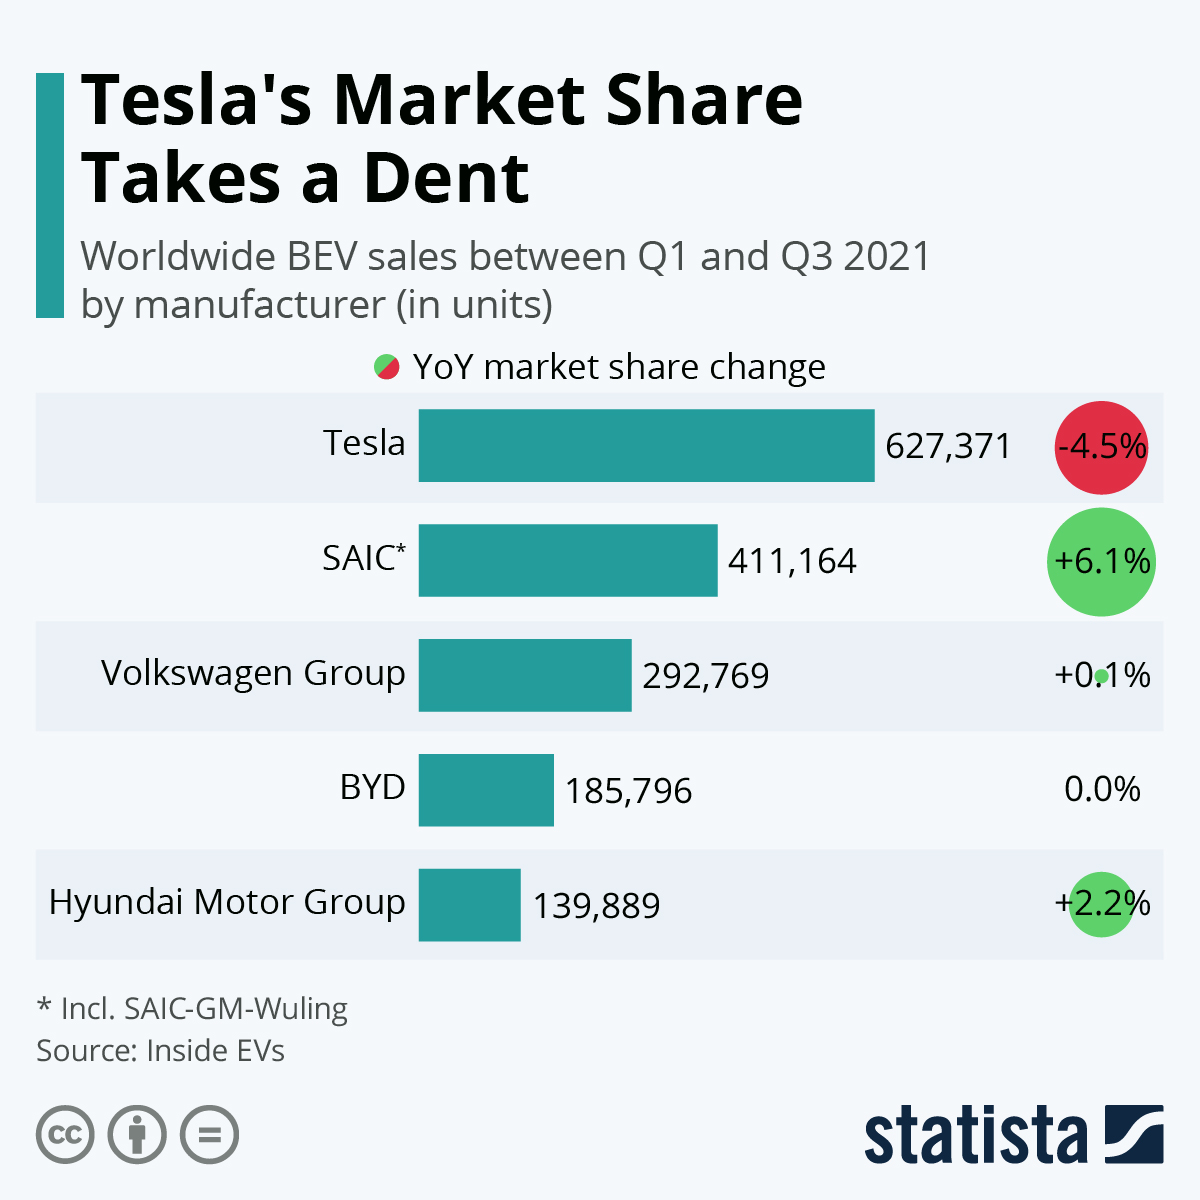 Tesla's Market Share Takes a Dent